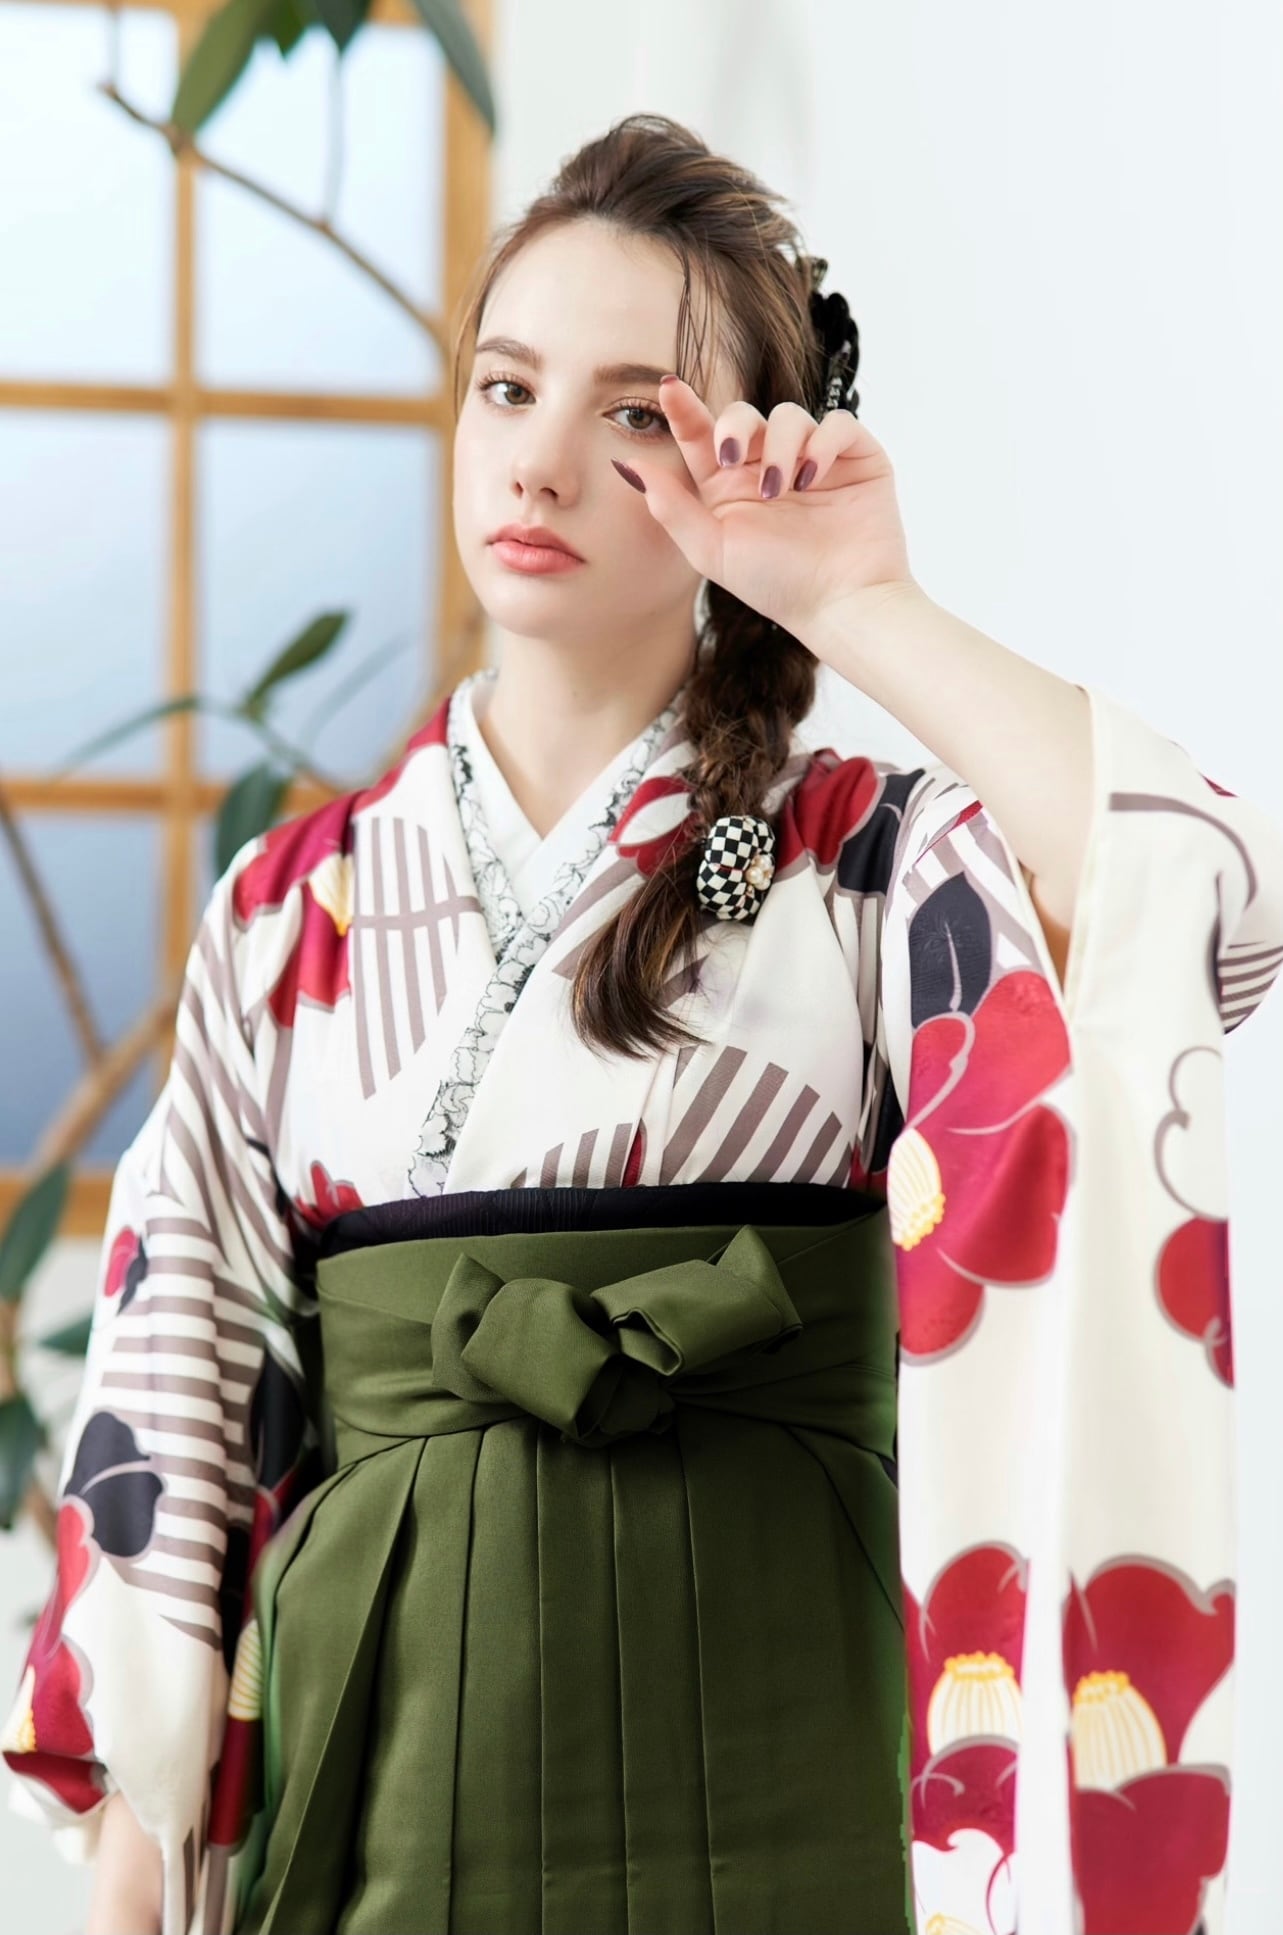 Kimono Sienne 卒業式袴3点セット 白 椿 袴 二尺袖着物 袴 卒業式 | Kimono Sienne